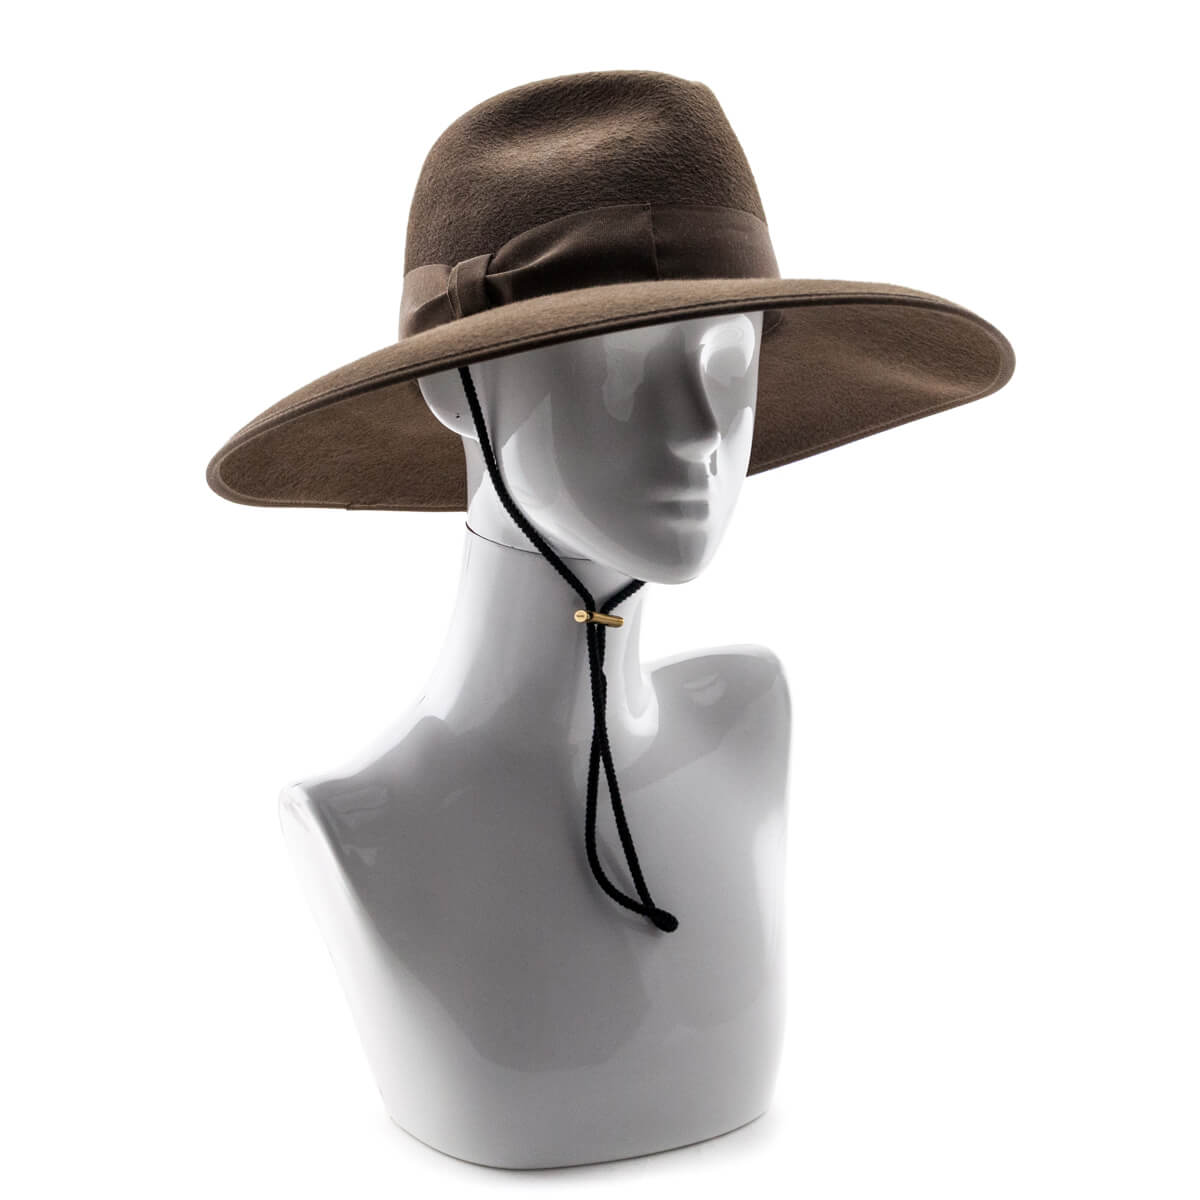 Gucci Brown Rabbit Felt Sereno Hat Size S - Love that Bag etc - Preowned Authentic Designer Handbags & Preloved Fashions